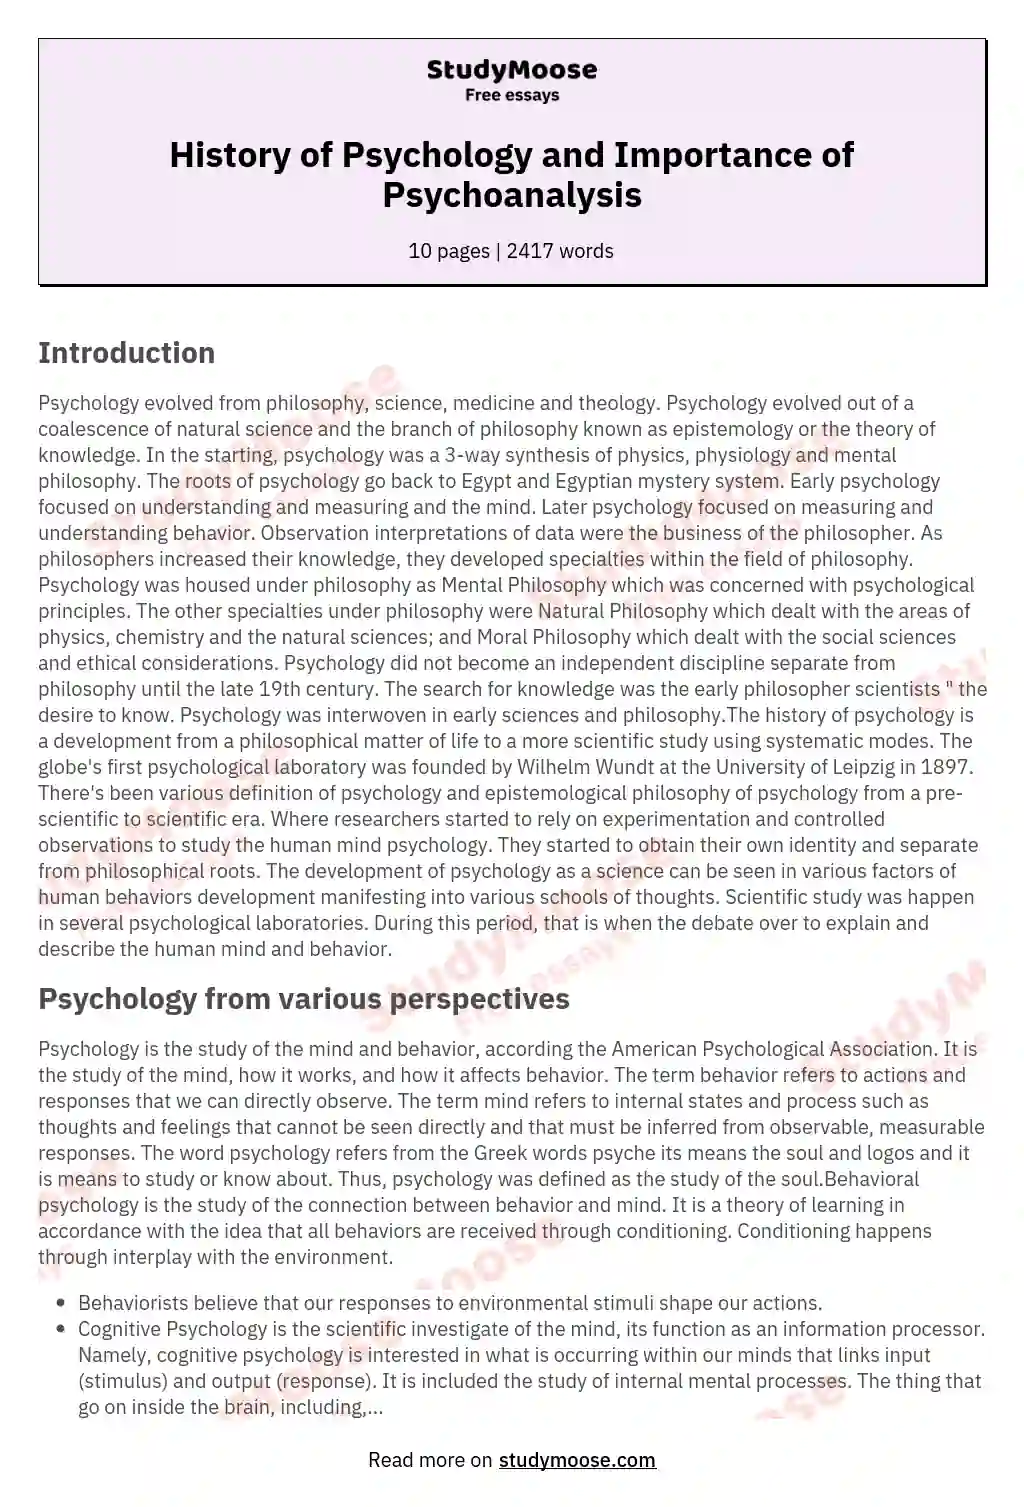 History of Psychology and Importance of Psychoanalysis essay